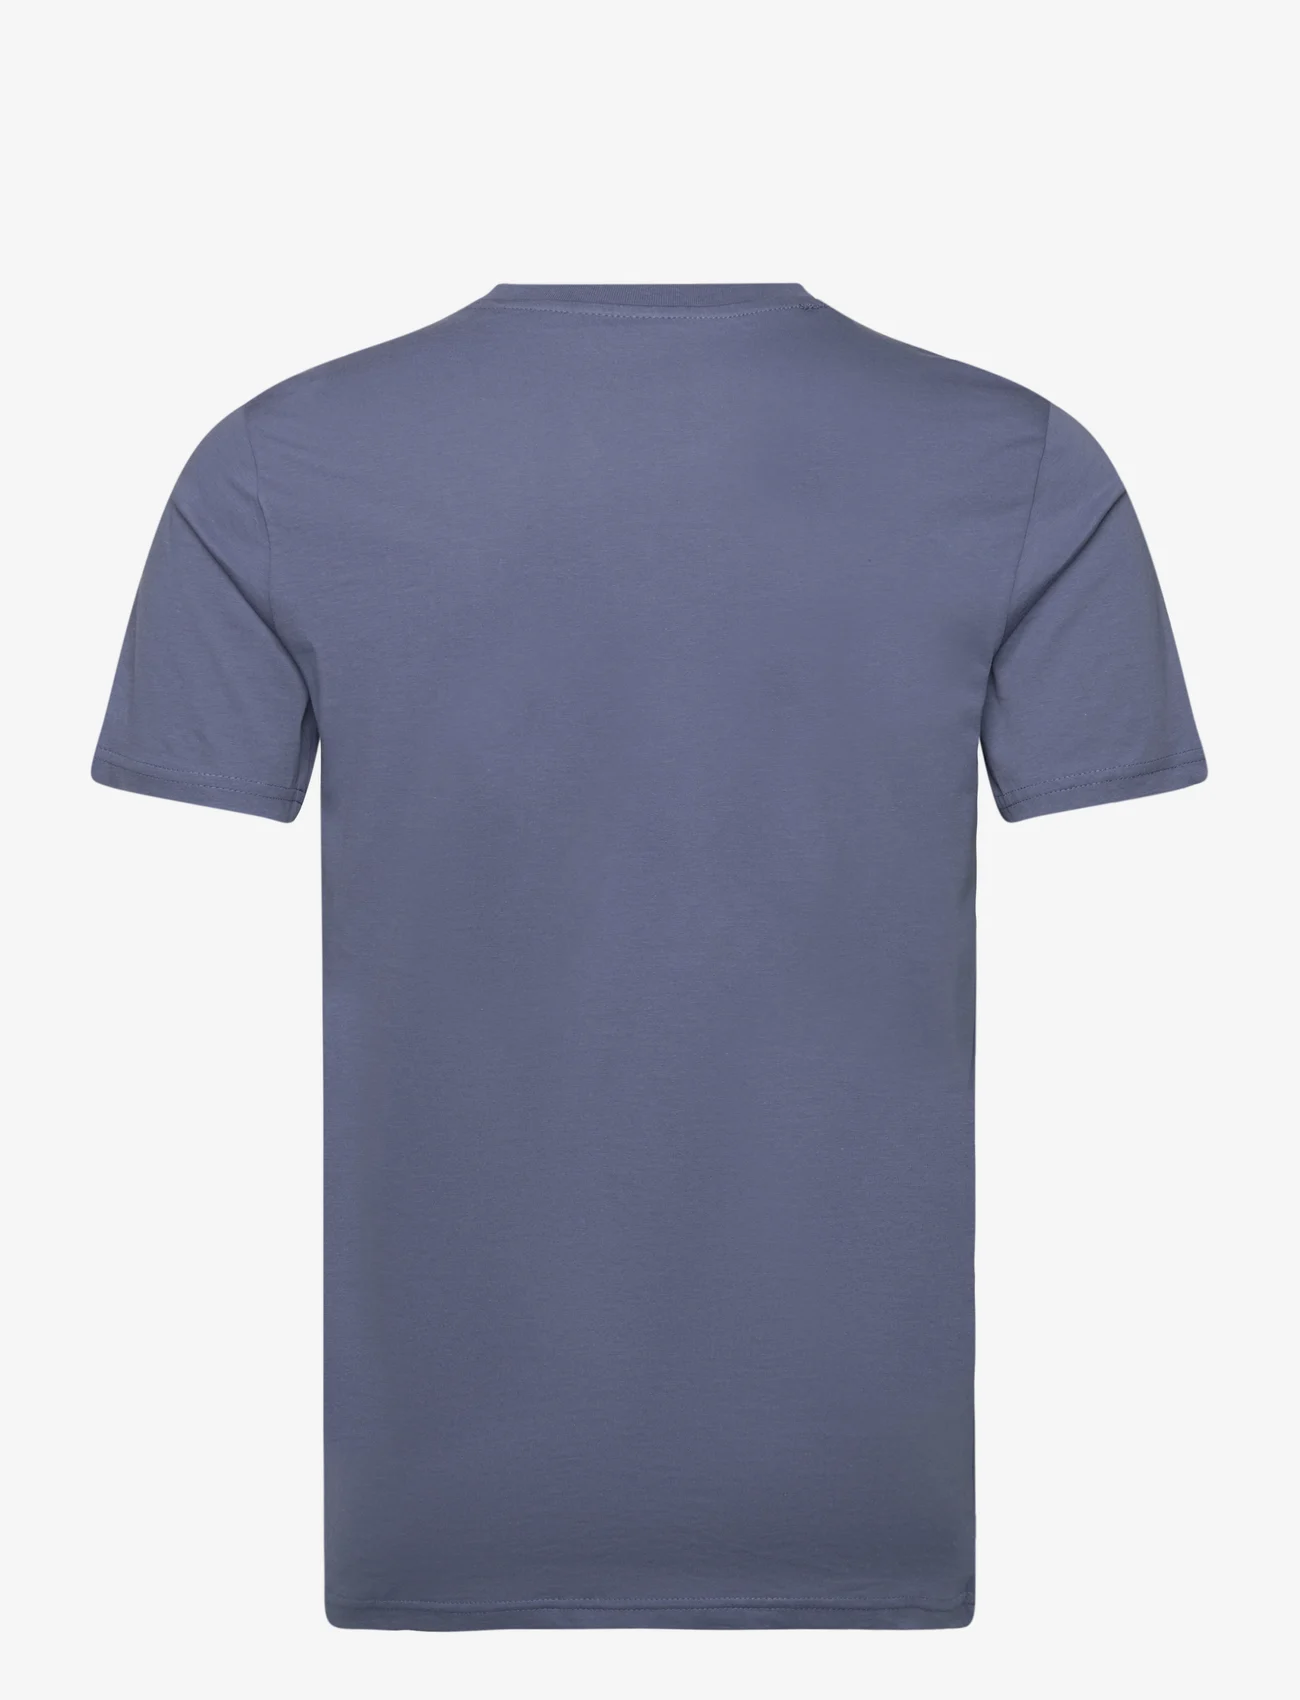 Knowledge Cotton Apparel - ALDER big owl tee - GOTS/Vegan - kortärmade t-shirts - moonlight blue - 1